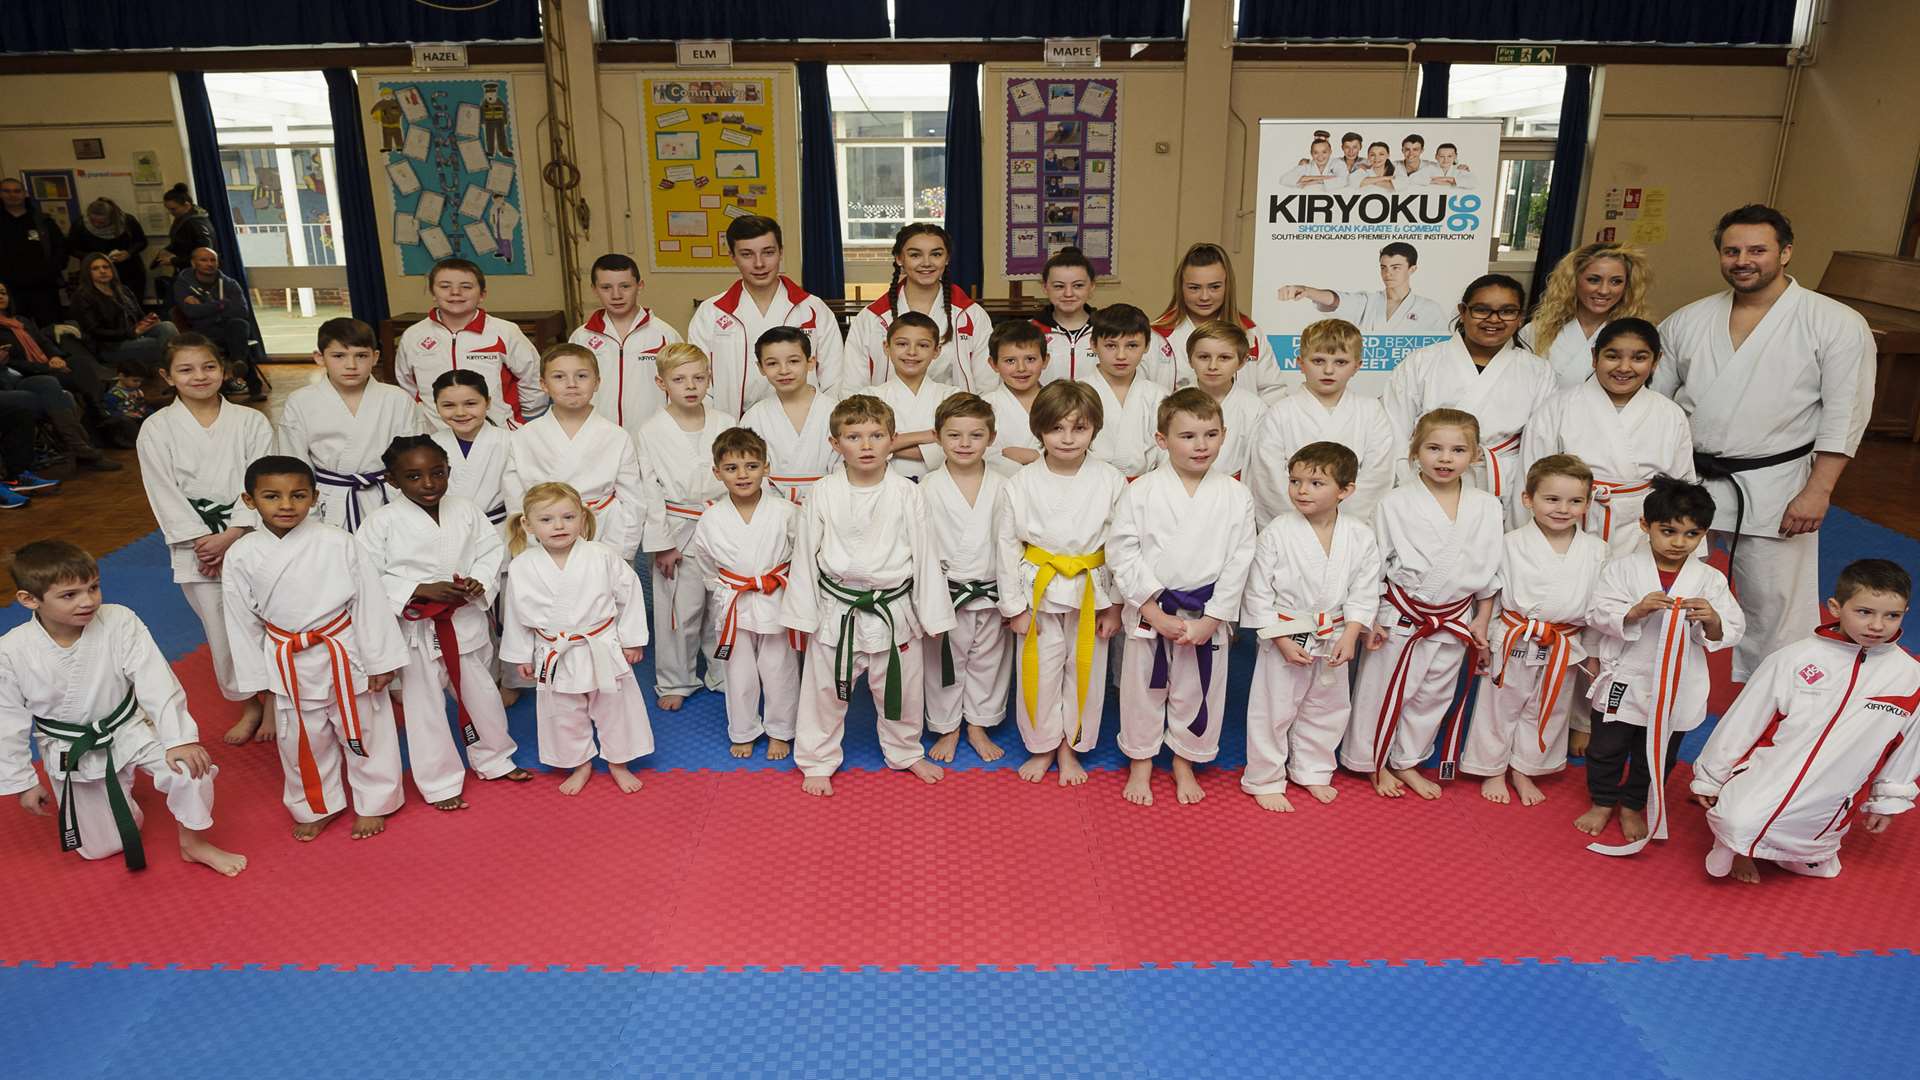 The Kiryoku Karate Club